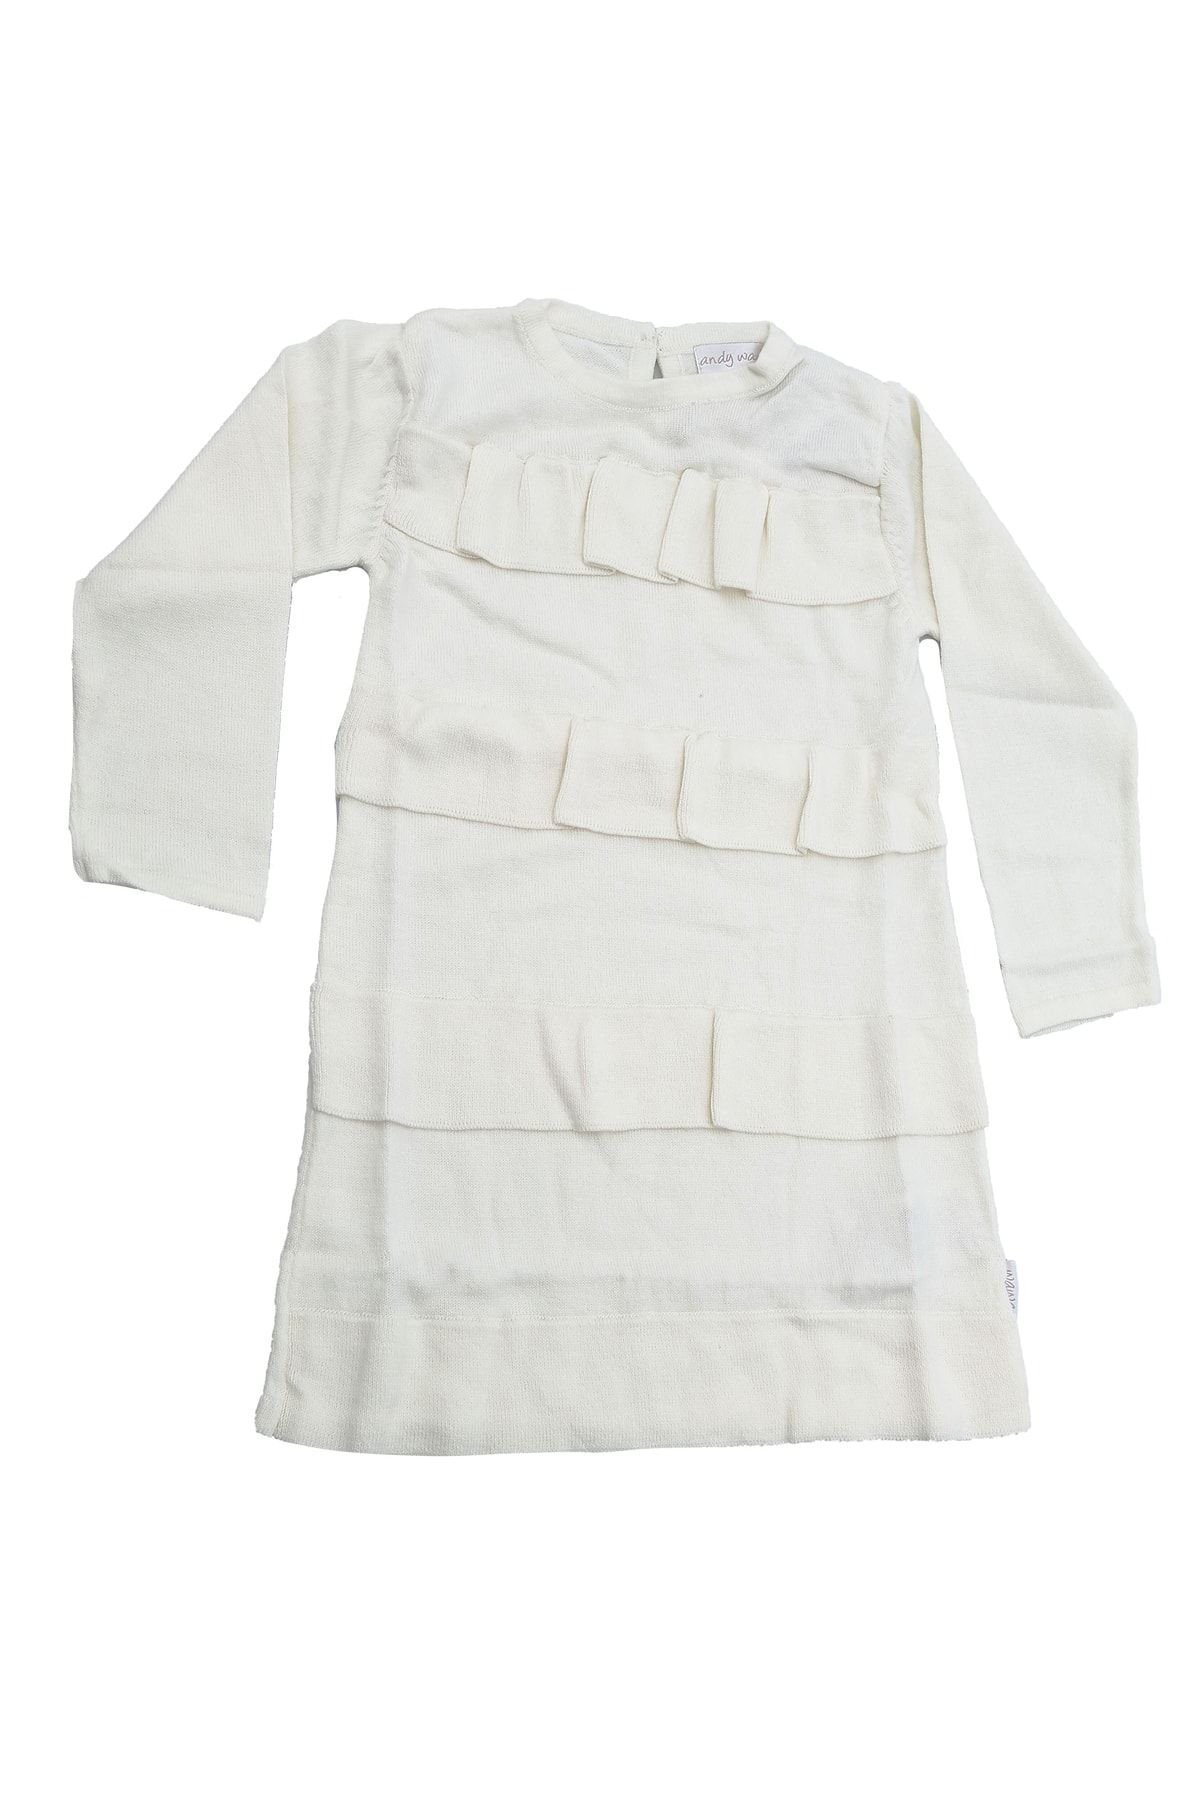 Andy Wawa Kız Bebek Pamuklu Triko Kışlık Elbise